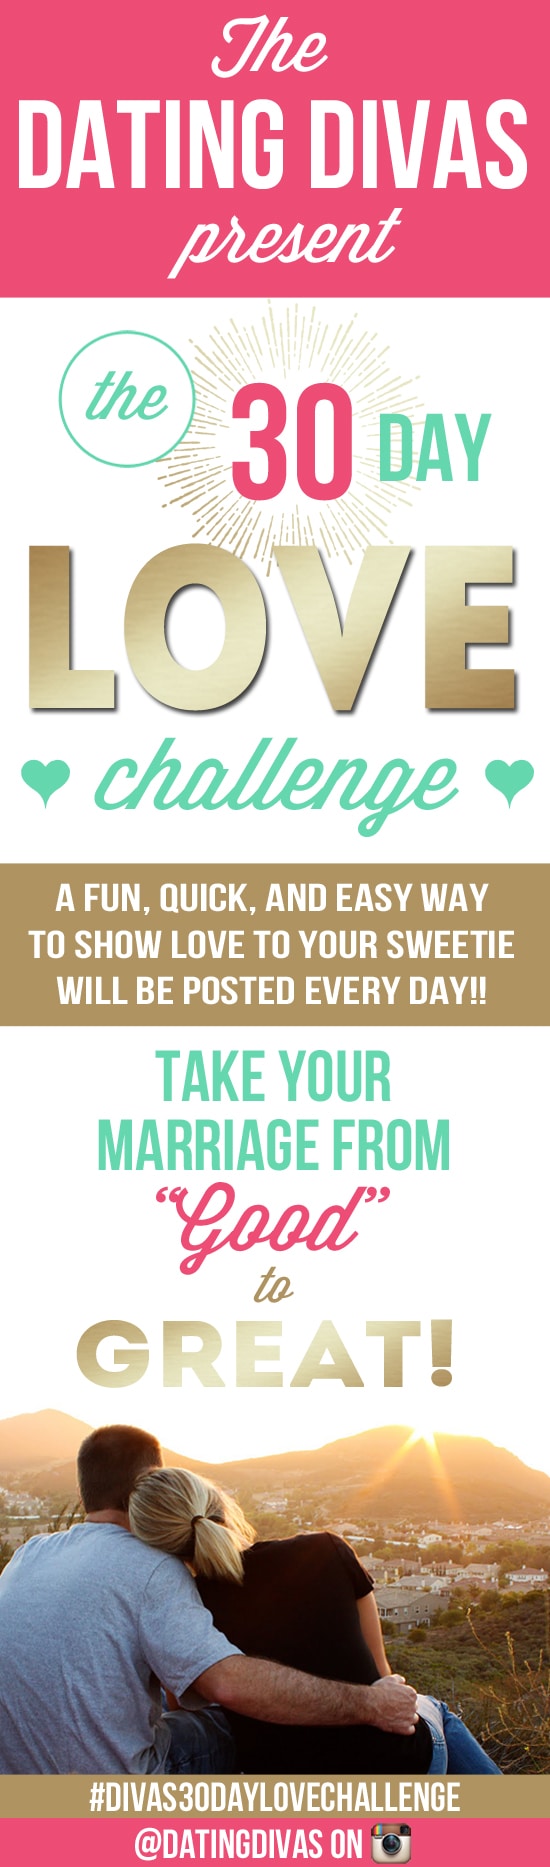 30 Day Love Challenge